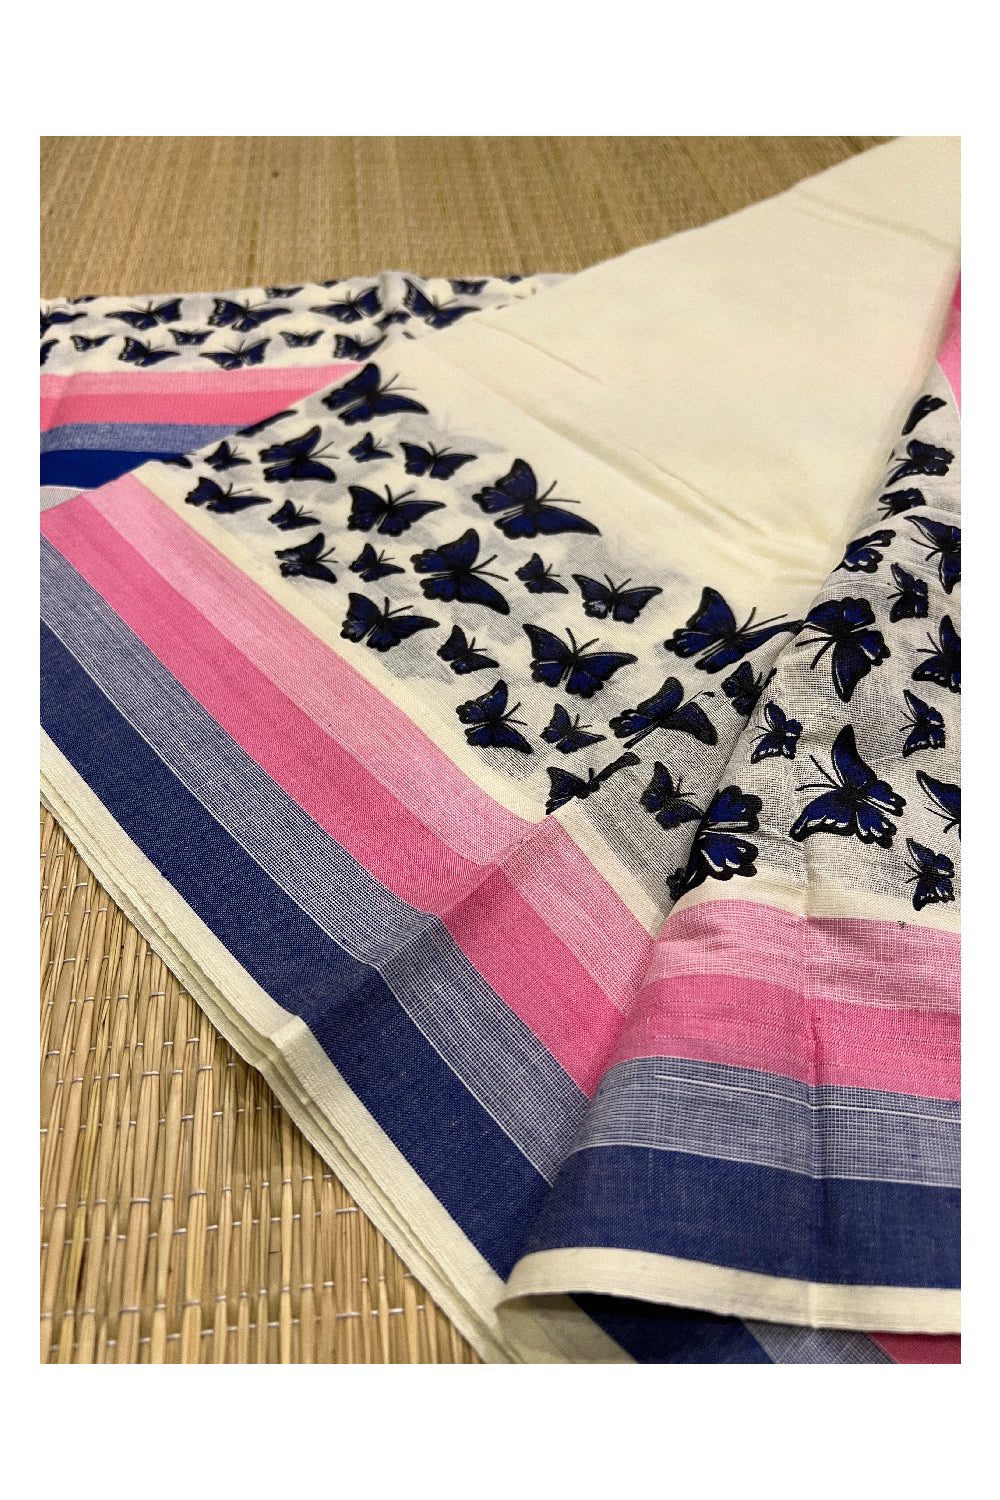 Kerala Cotton Set Mundu (Mundum Neriyathum) with Peach Blue Butterfly Block Prints on Border